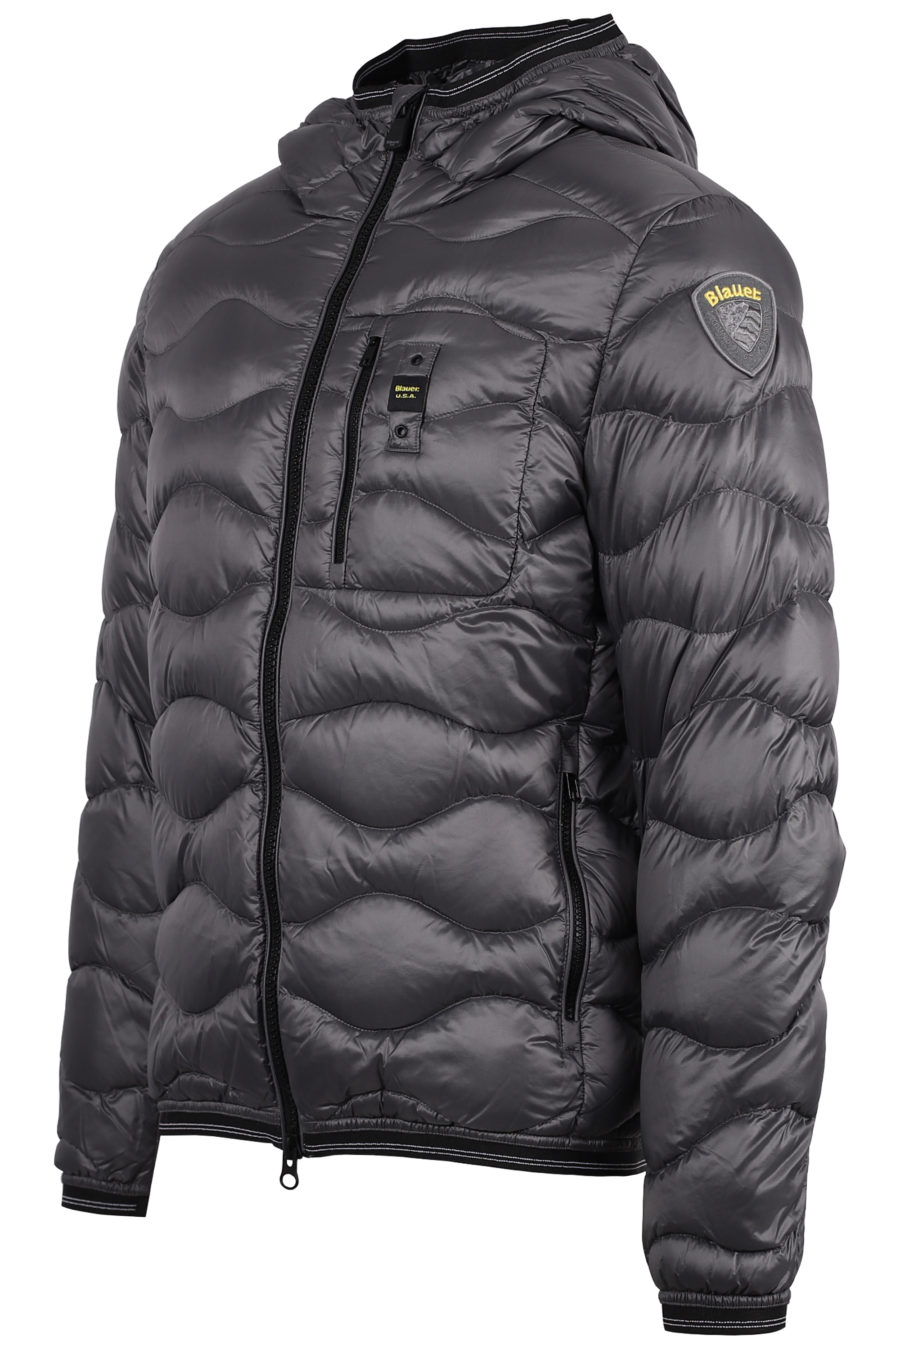 Dark grey puffer jacket with waves - IMG 1300